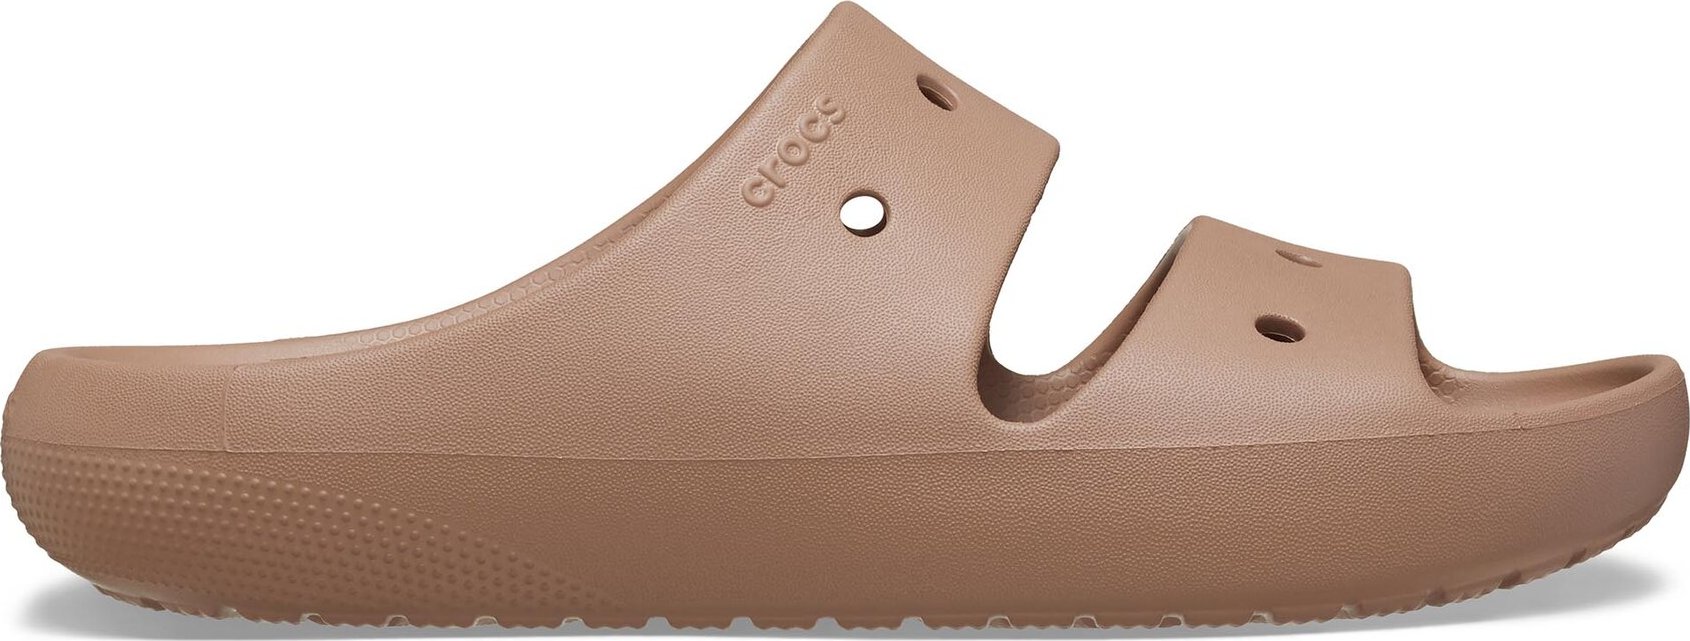 Nazouváky Crocs Classic Sandal V 209403 Latte 2Q9